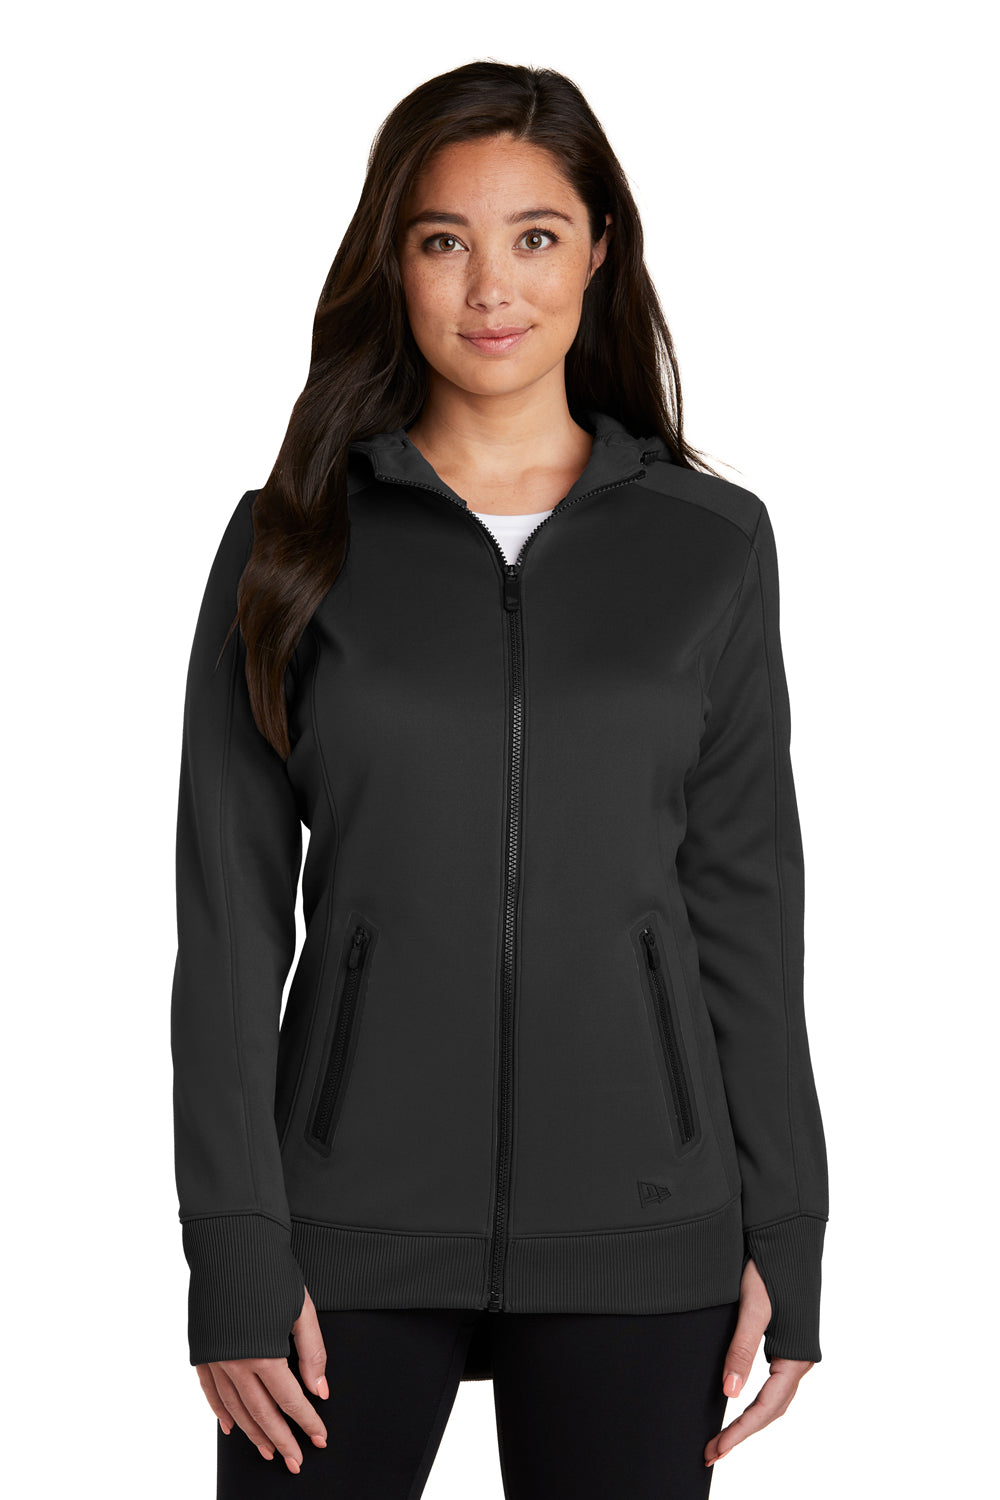 New Era LNEA522 Womens Venue Moisture Wicking Fleece Full Zip Hooded Sweatshirt Hoodie Black Front